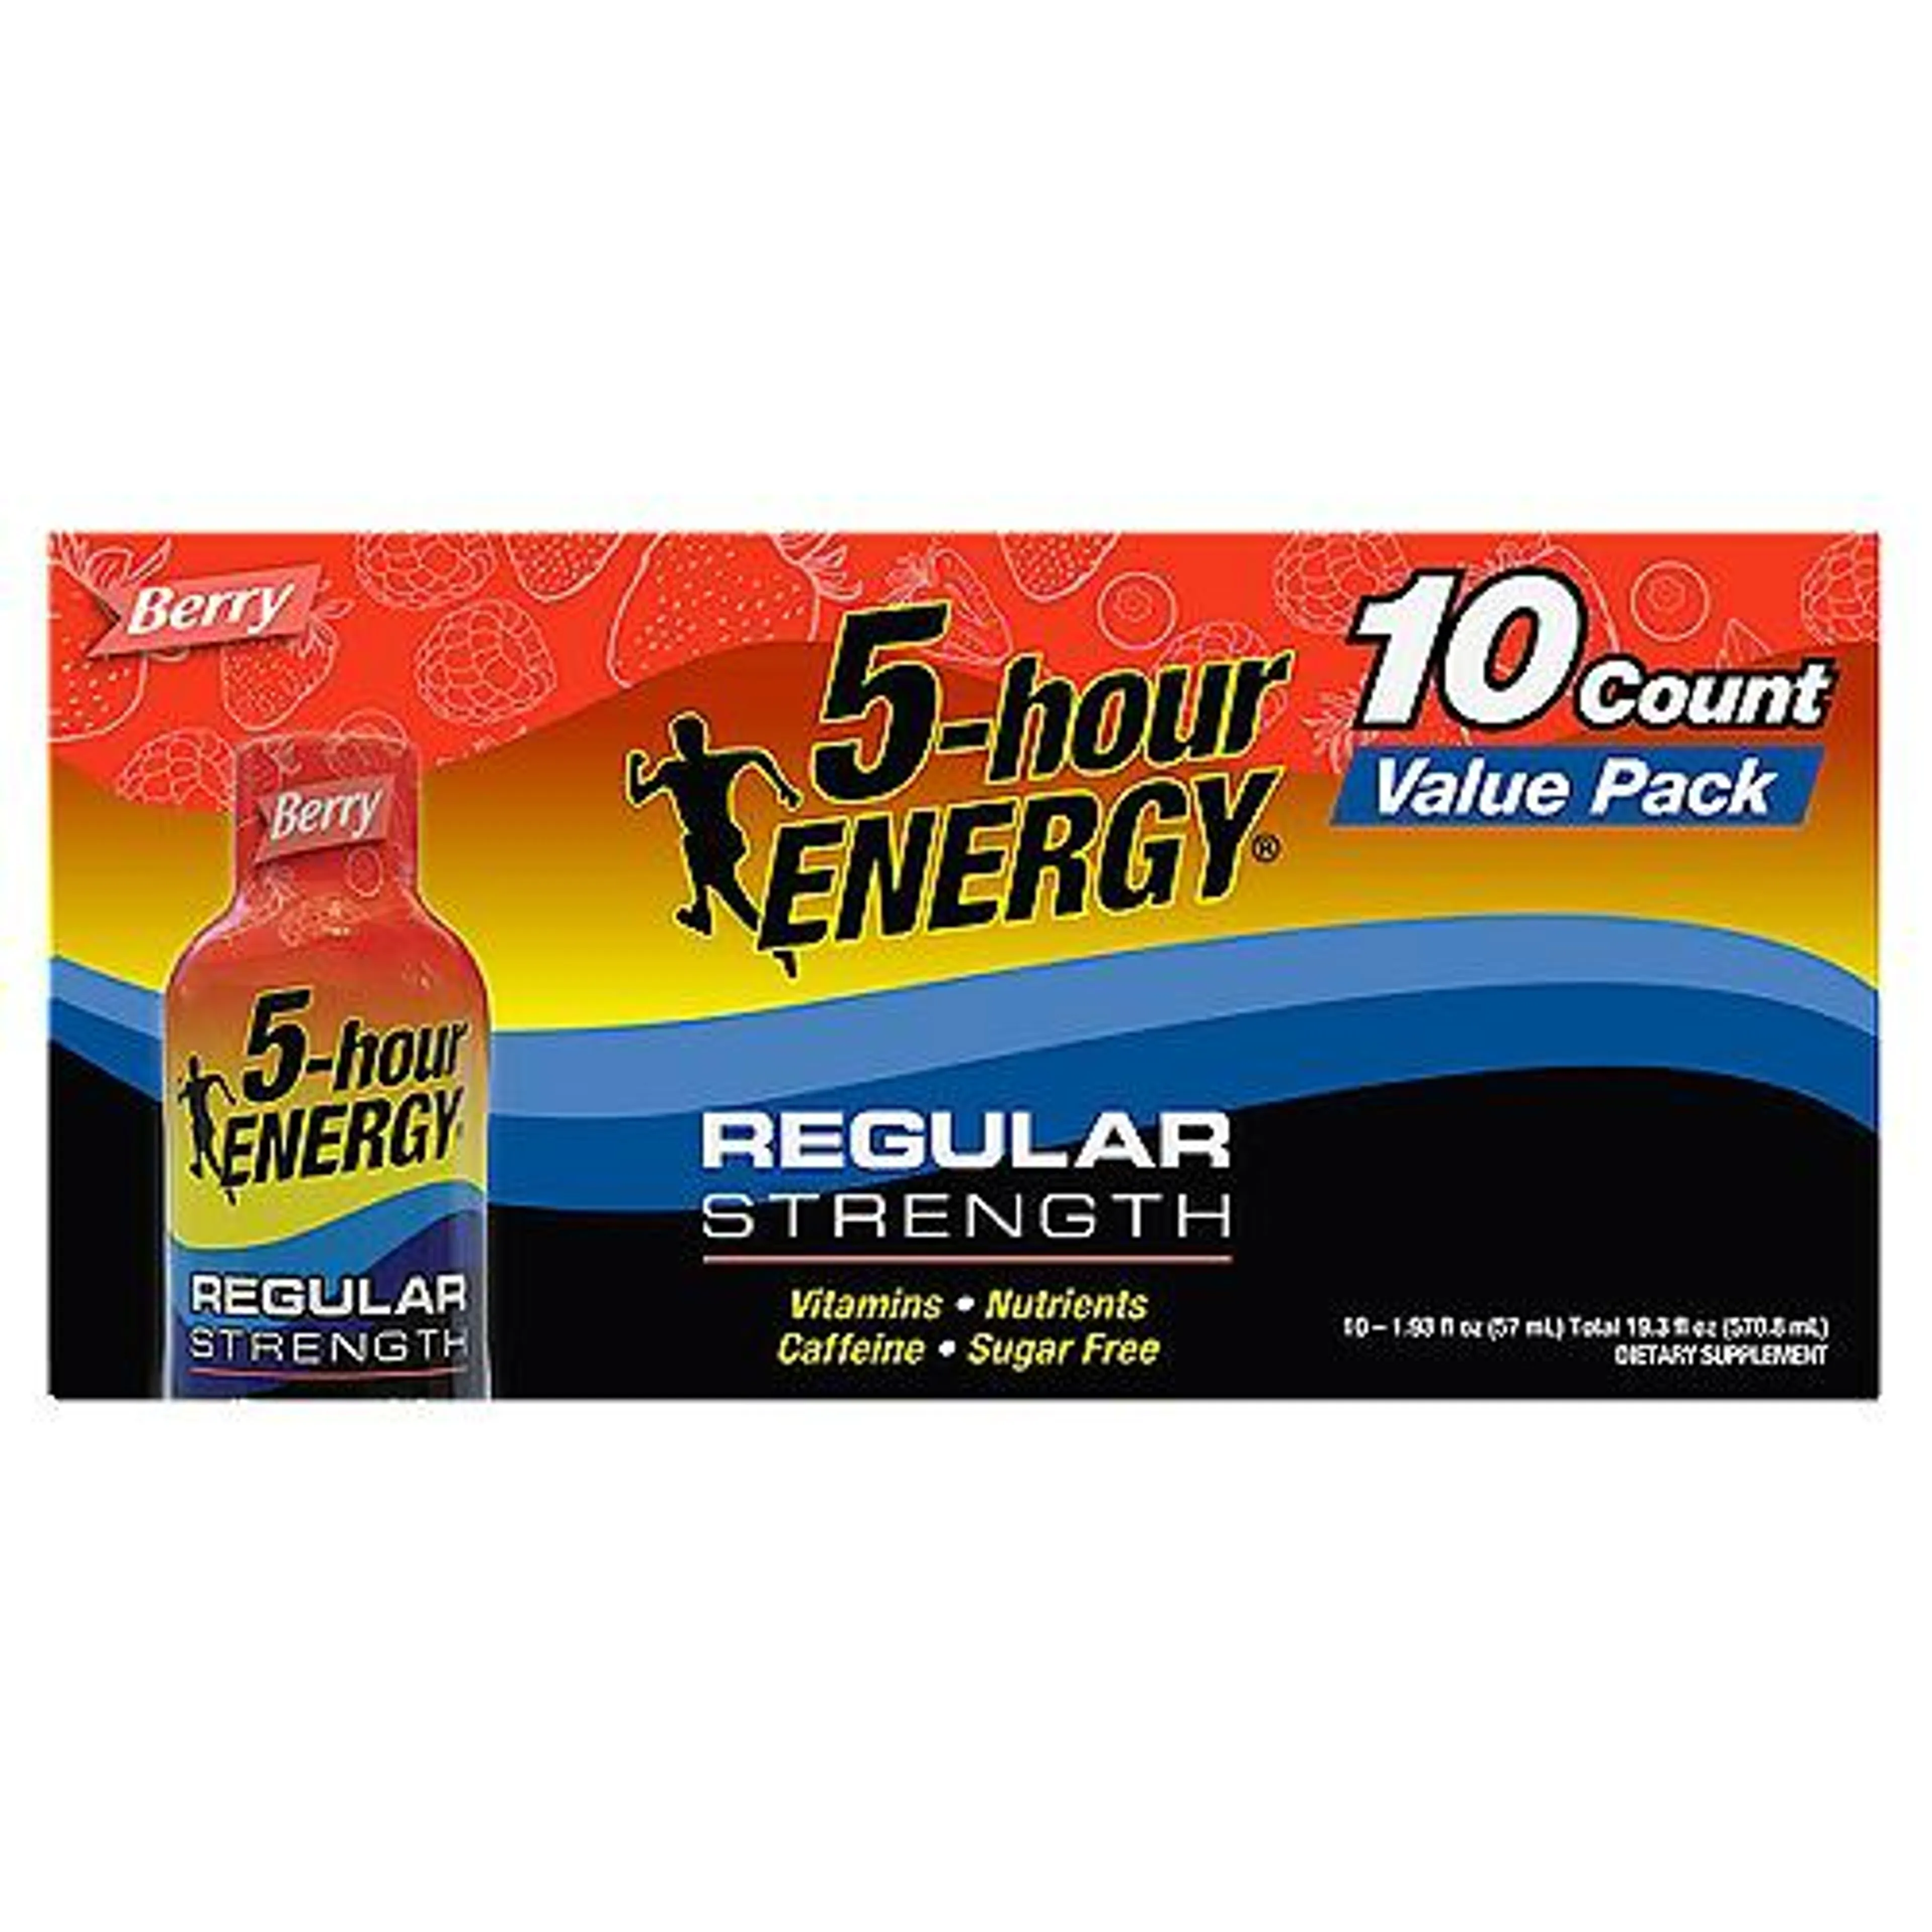 5-hour Energy Regular Strength Berry, Energy Drink, 10 Each